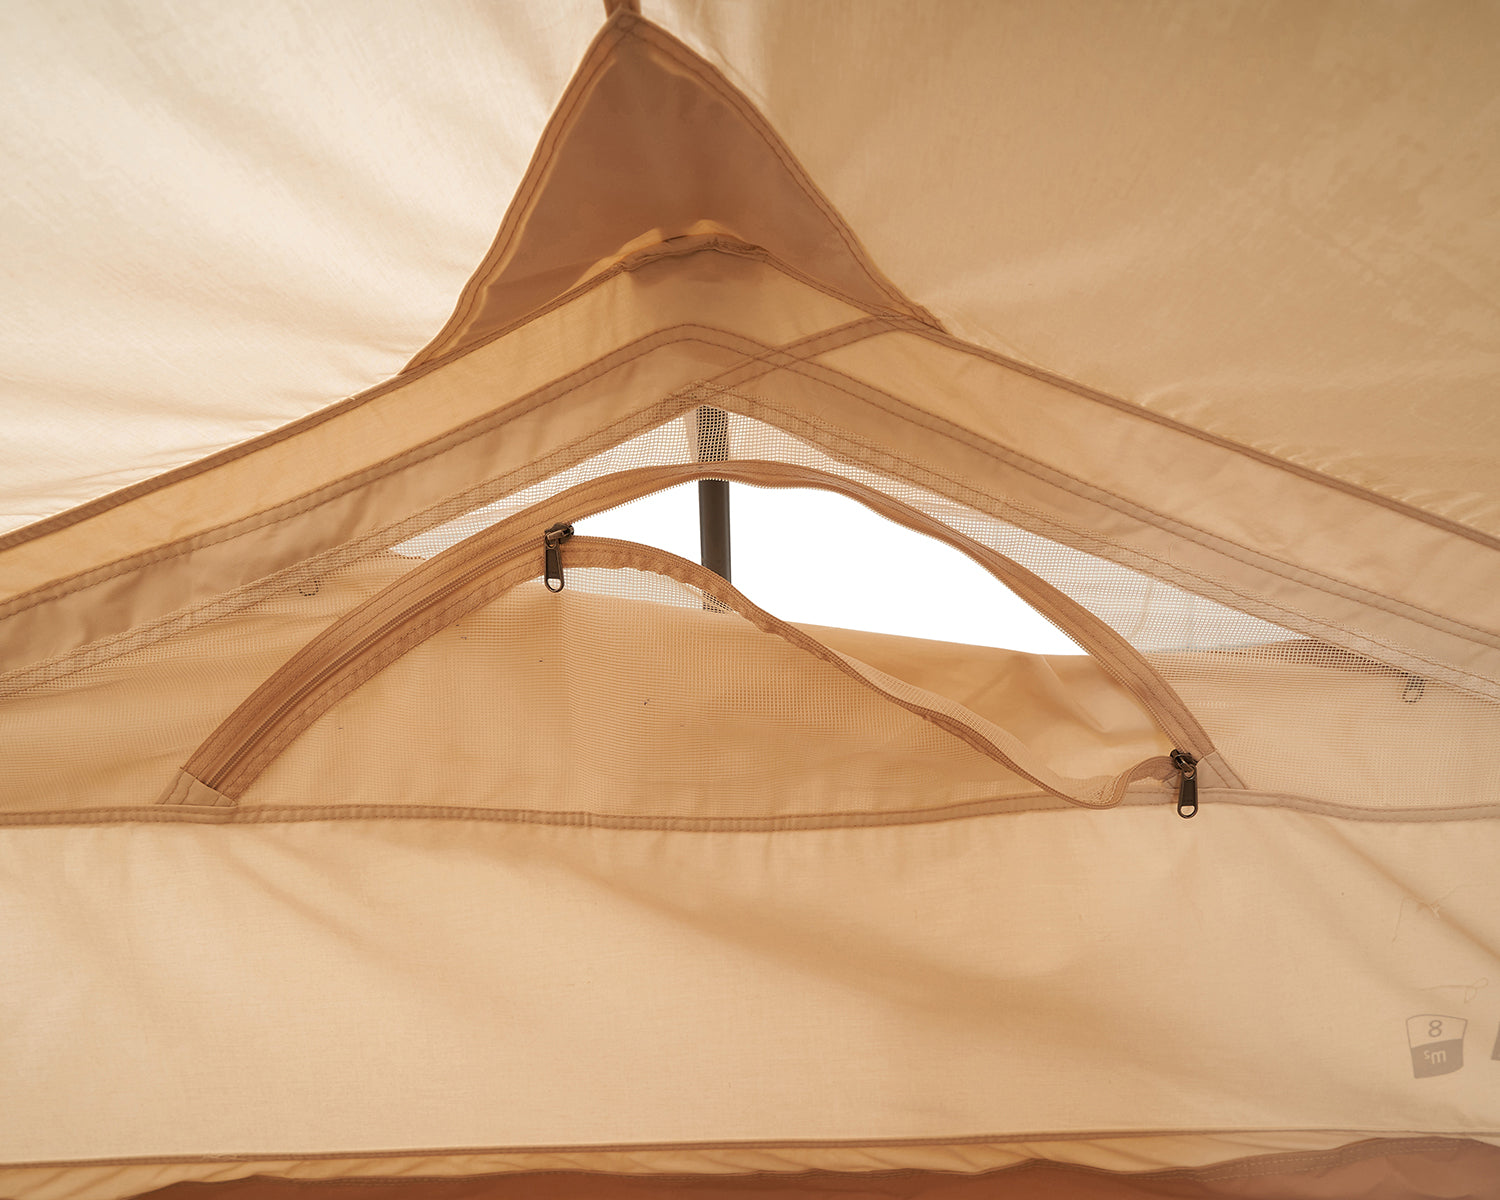 Jarnvid 8 m² technical cotton tent - 8 m² - Sandshell